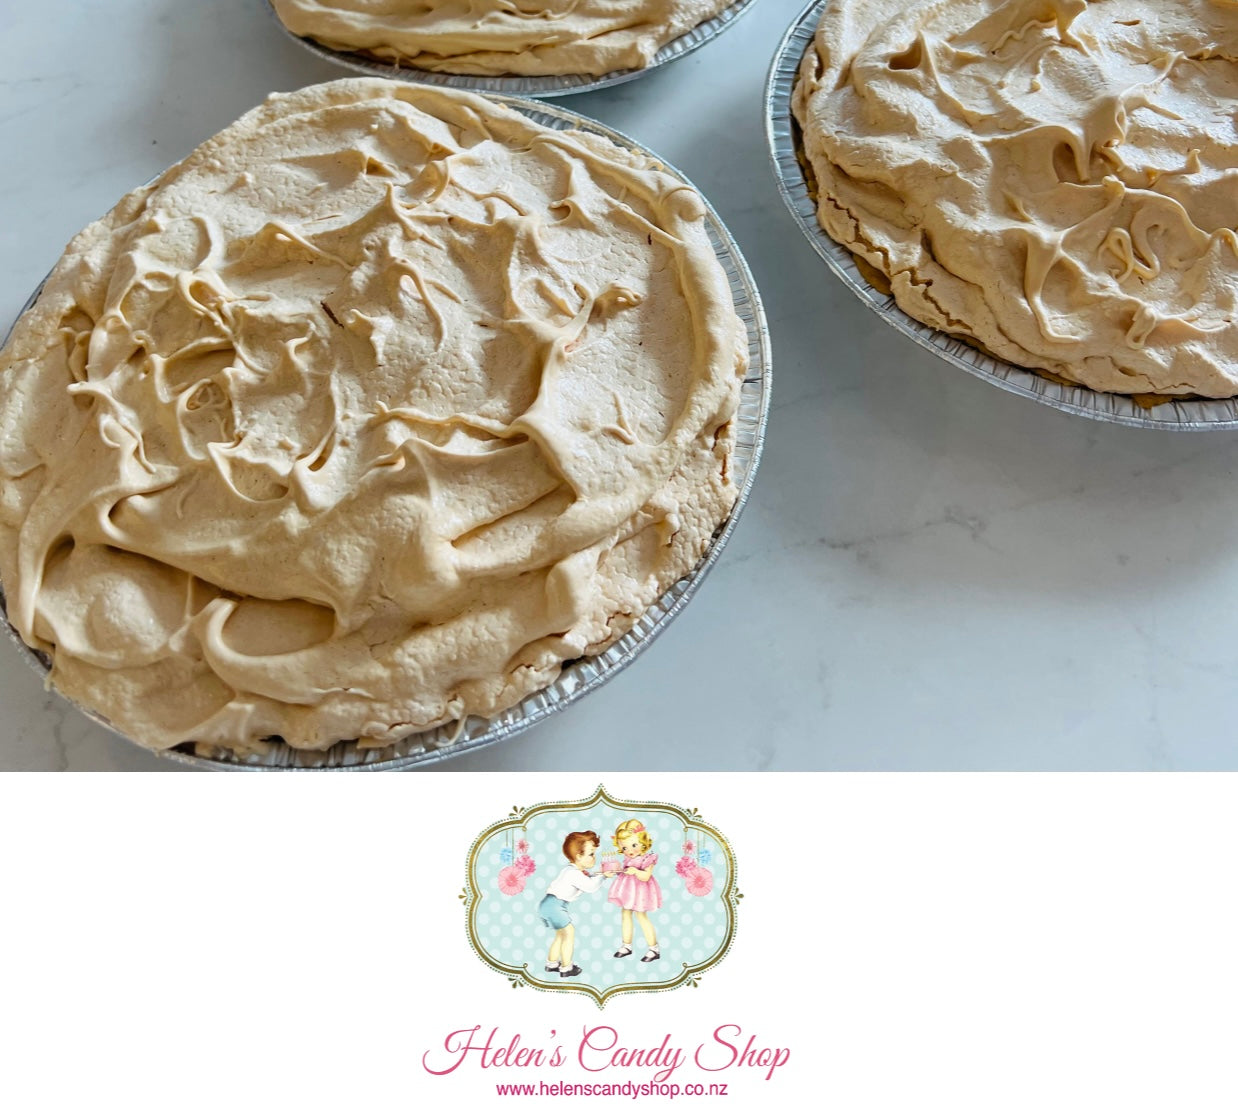 9” Sweet Pie & Bite size Catering Platter